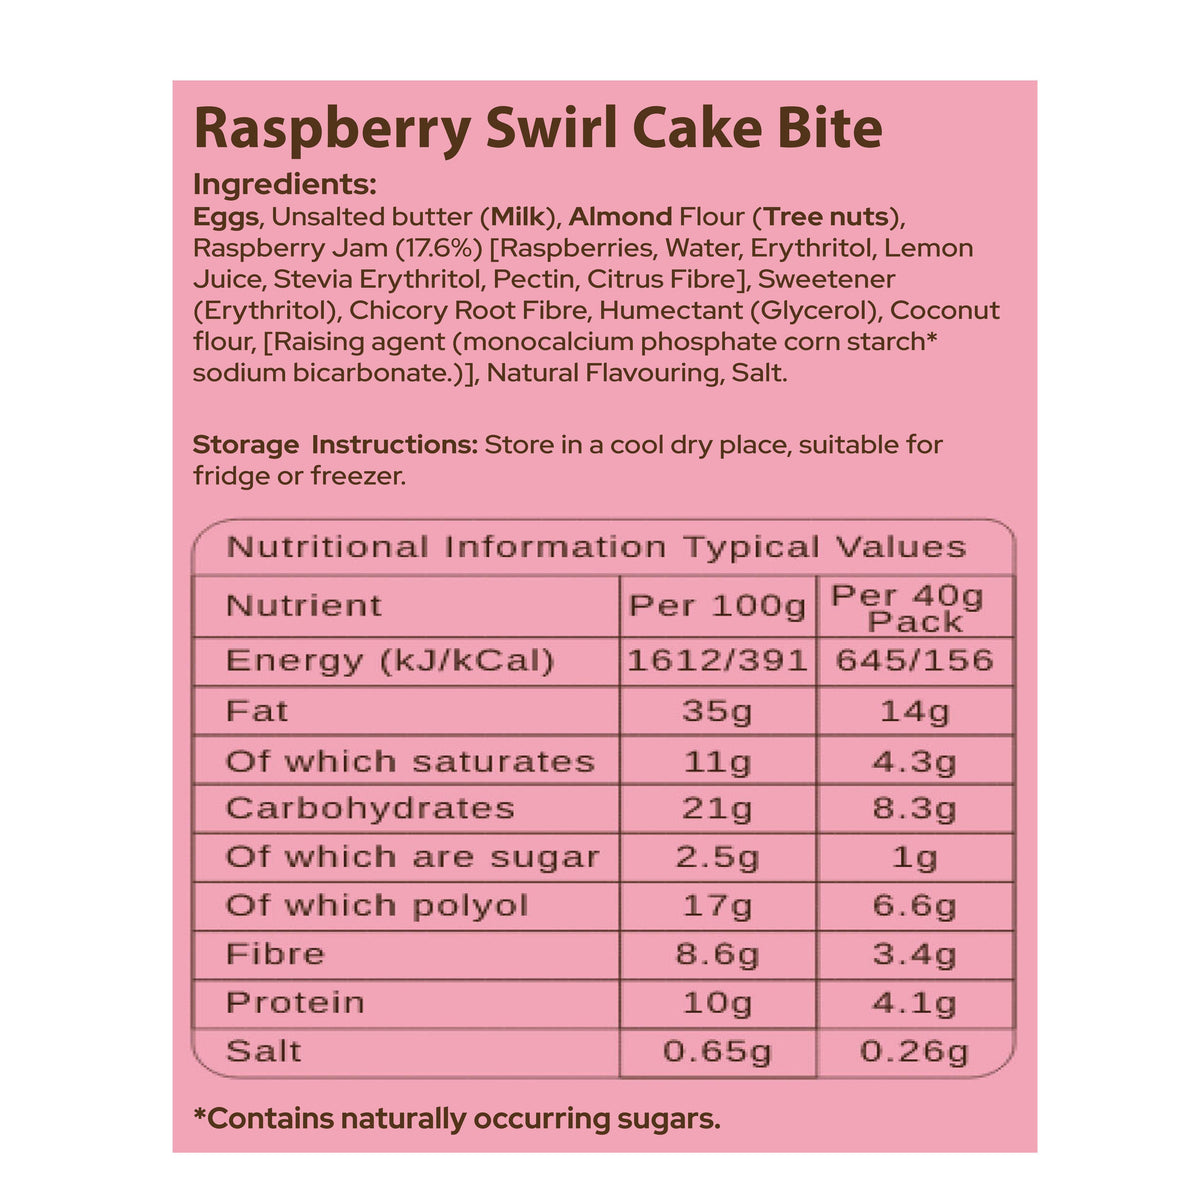 Raspberry swirls cake bite.
Product Name: Fruity Variety Cake Bite Pack | Keto
Brand Name: No Guilt Bakes